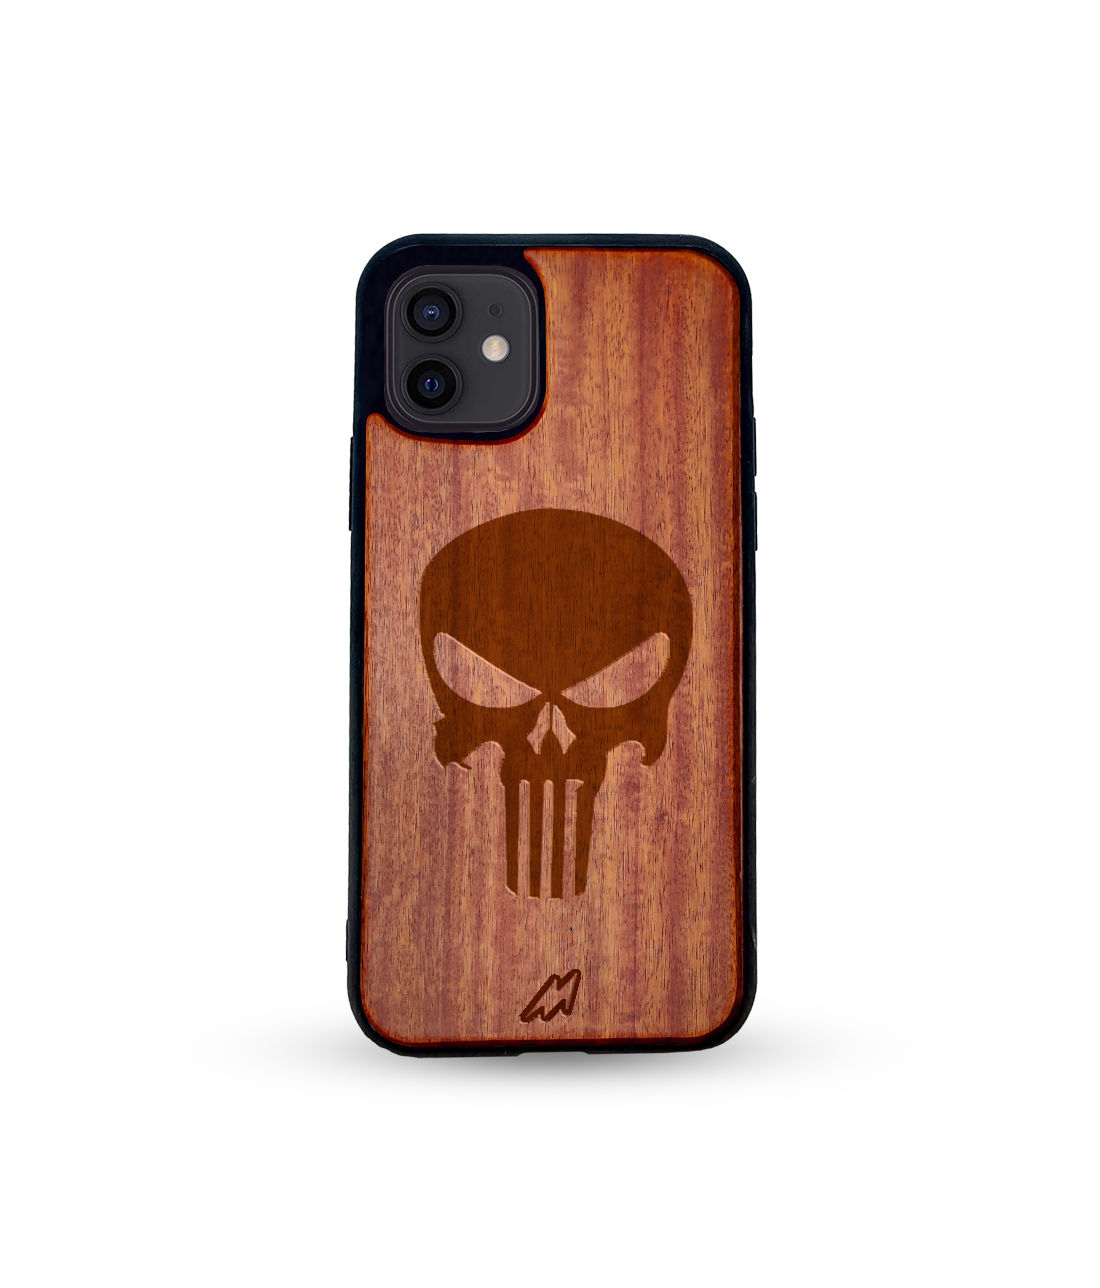 Punisher Symbol - Dark Shade Wooden Phone Case for iPhone 12